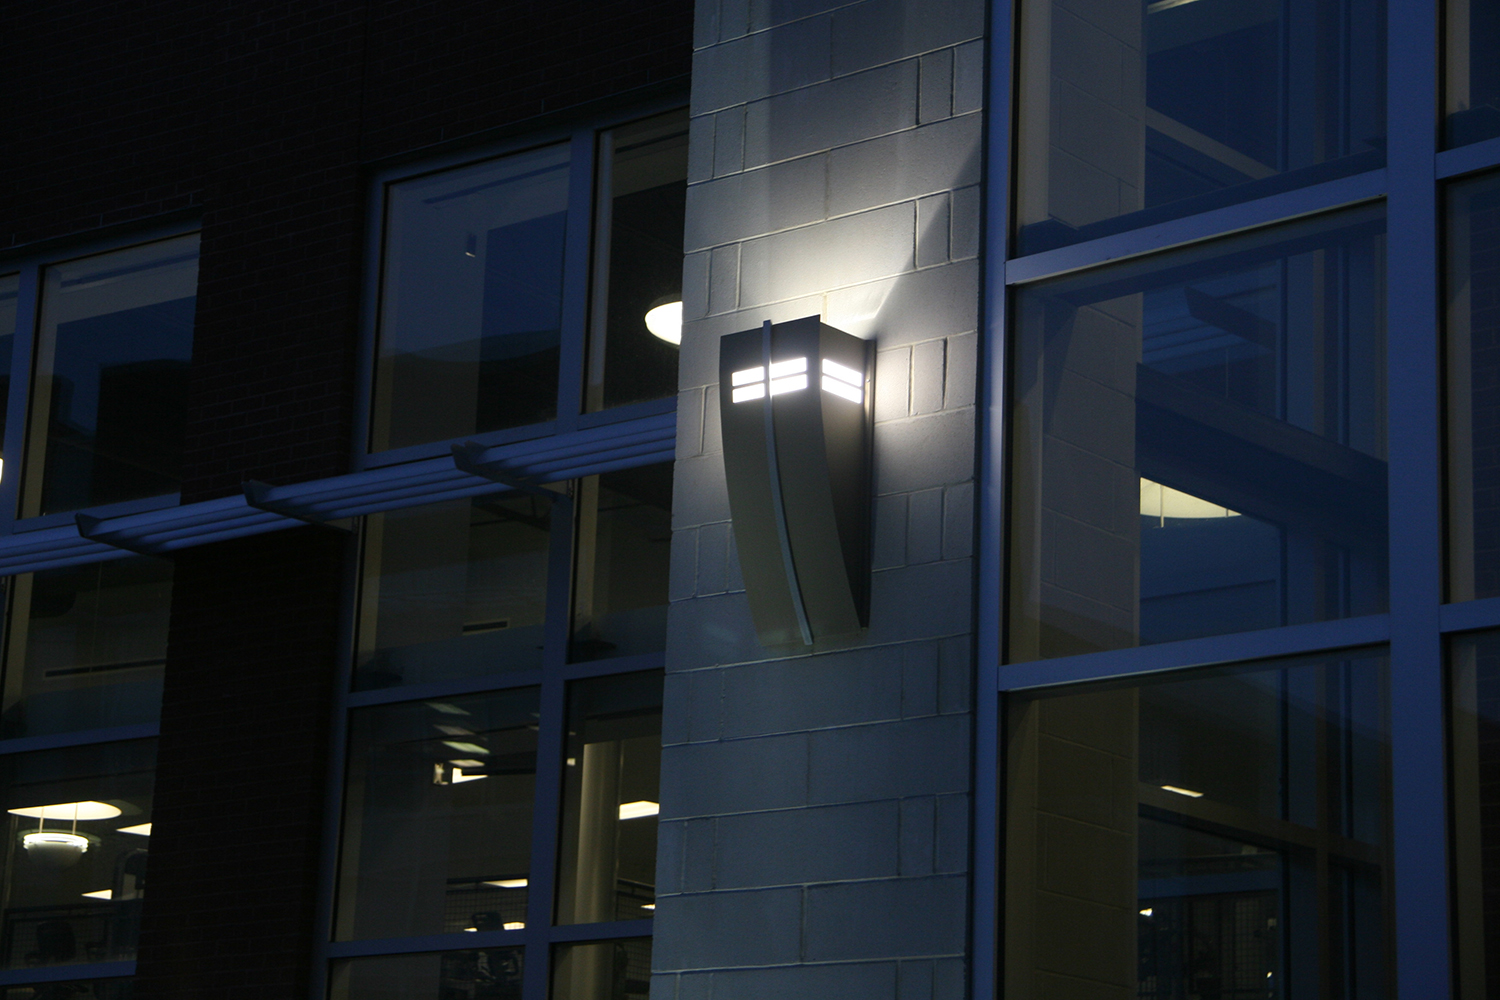 Cypress outdoor light fixture provides soft uplight between windows on a dark exterior